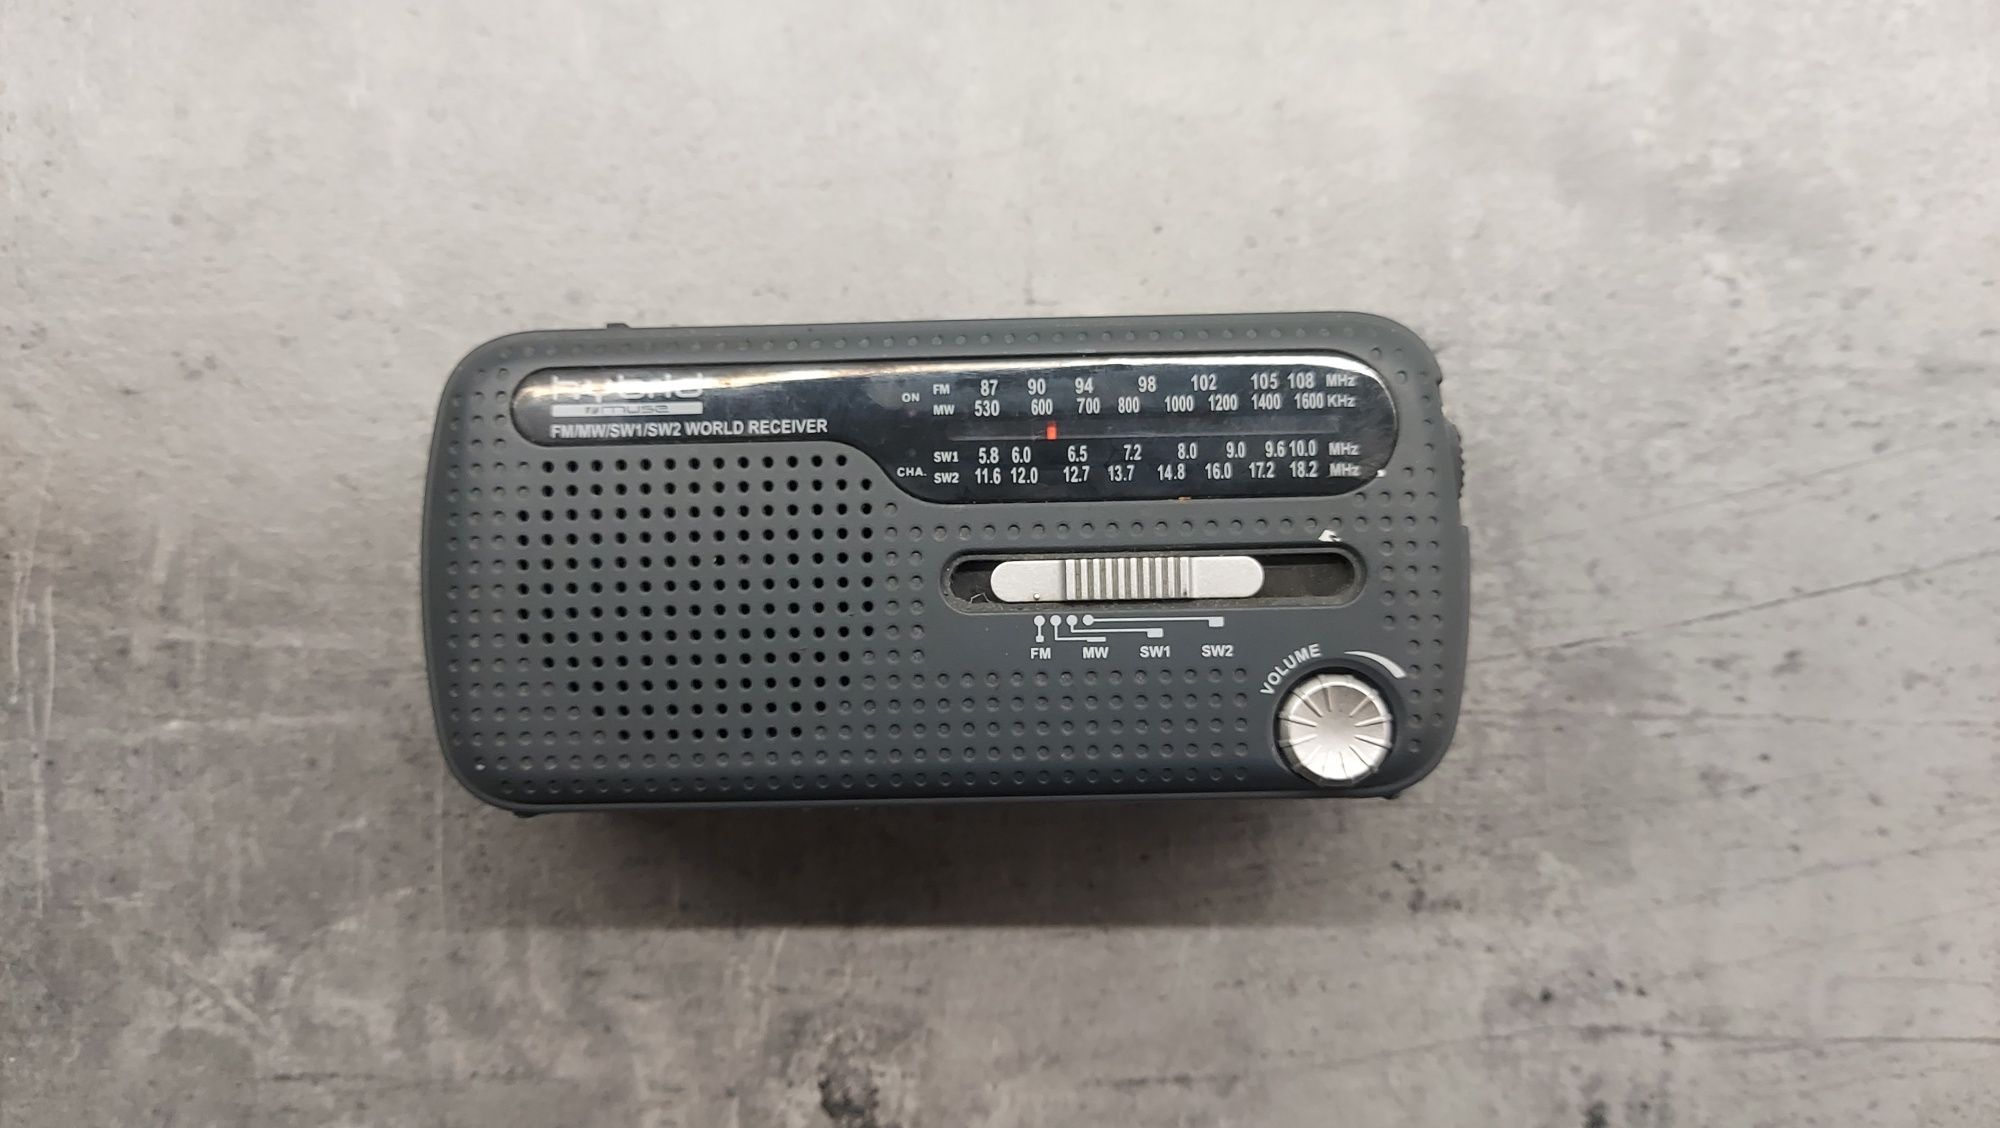 Radio Muse MU-MH-07DS bateria słoneczna, dynamo, syrena, latarka.